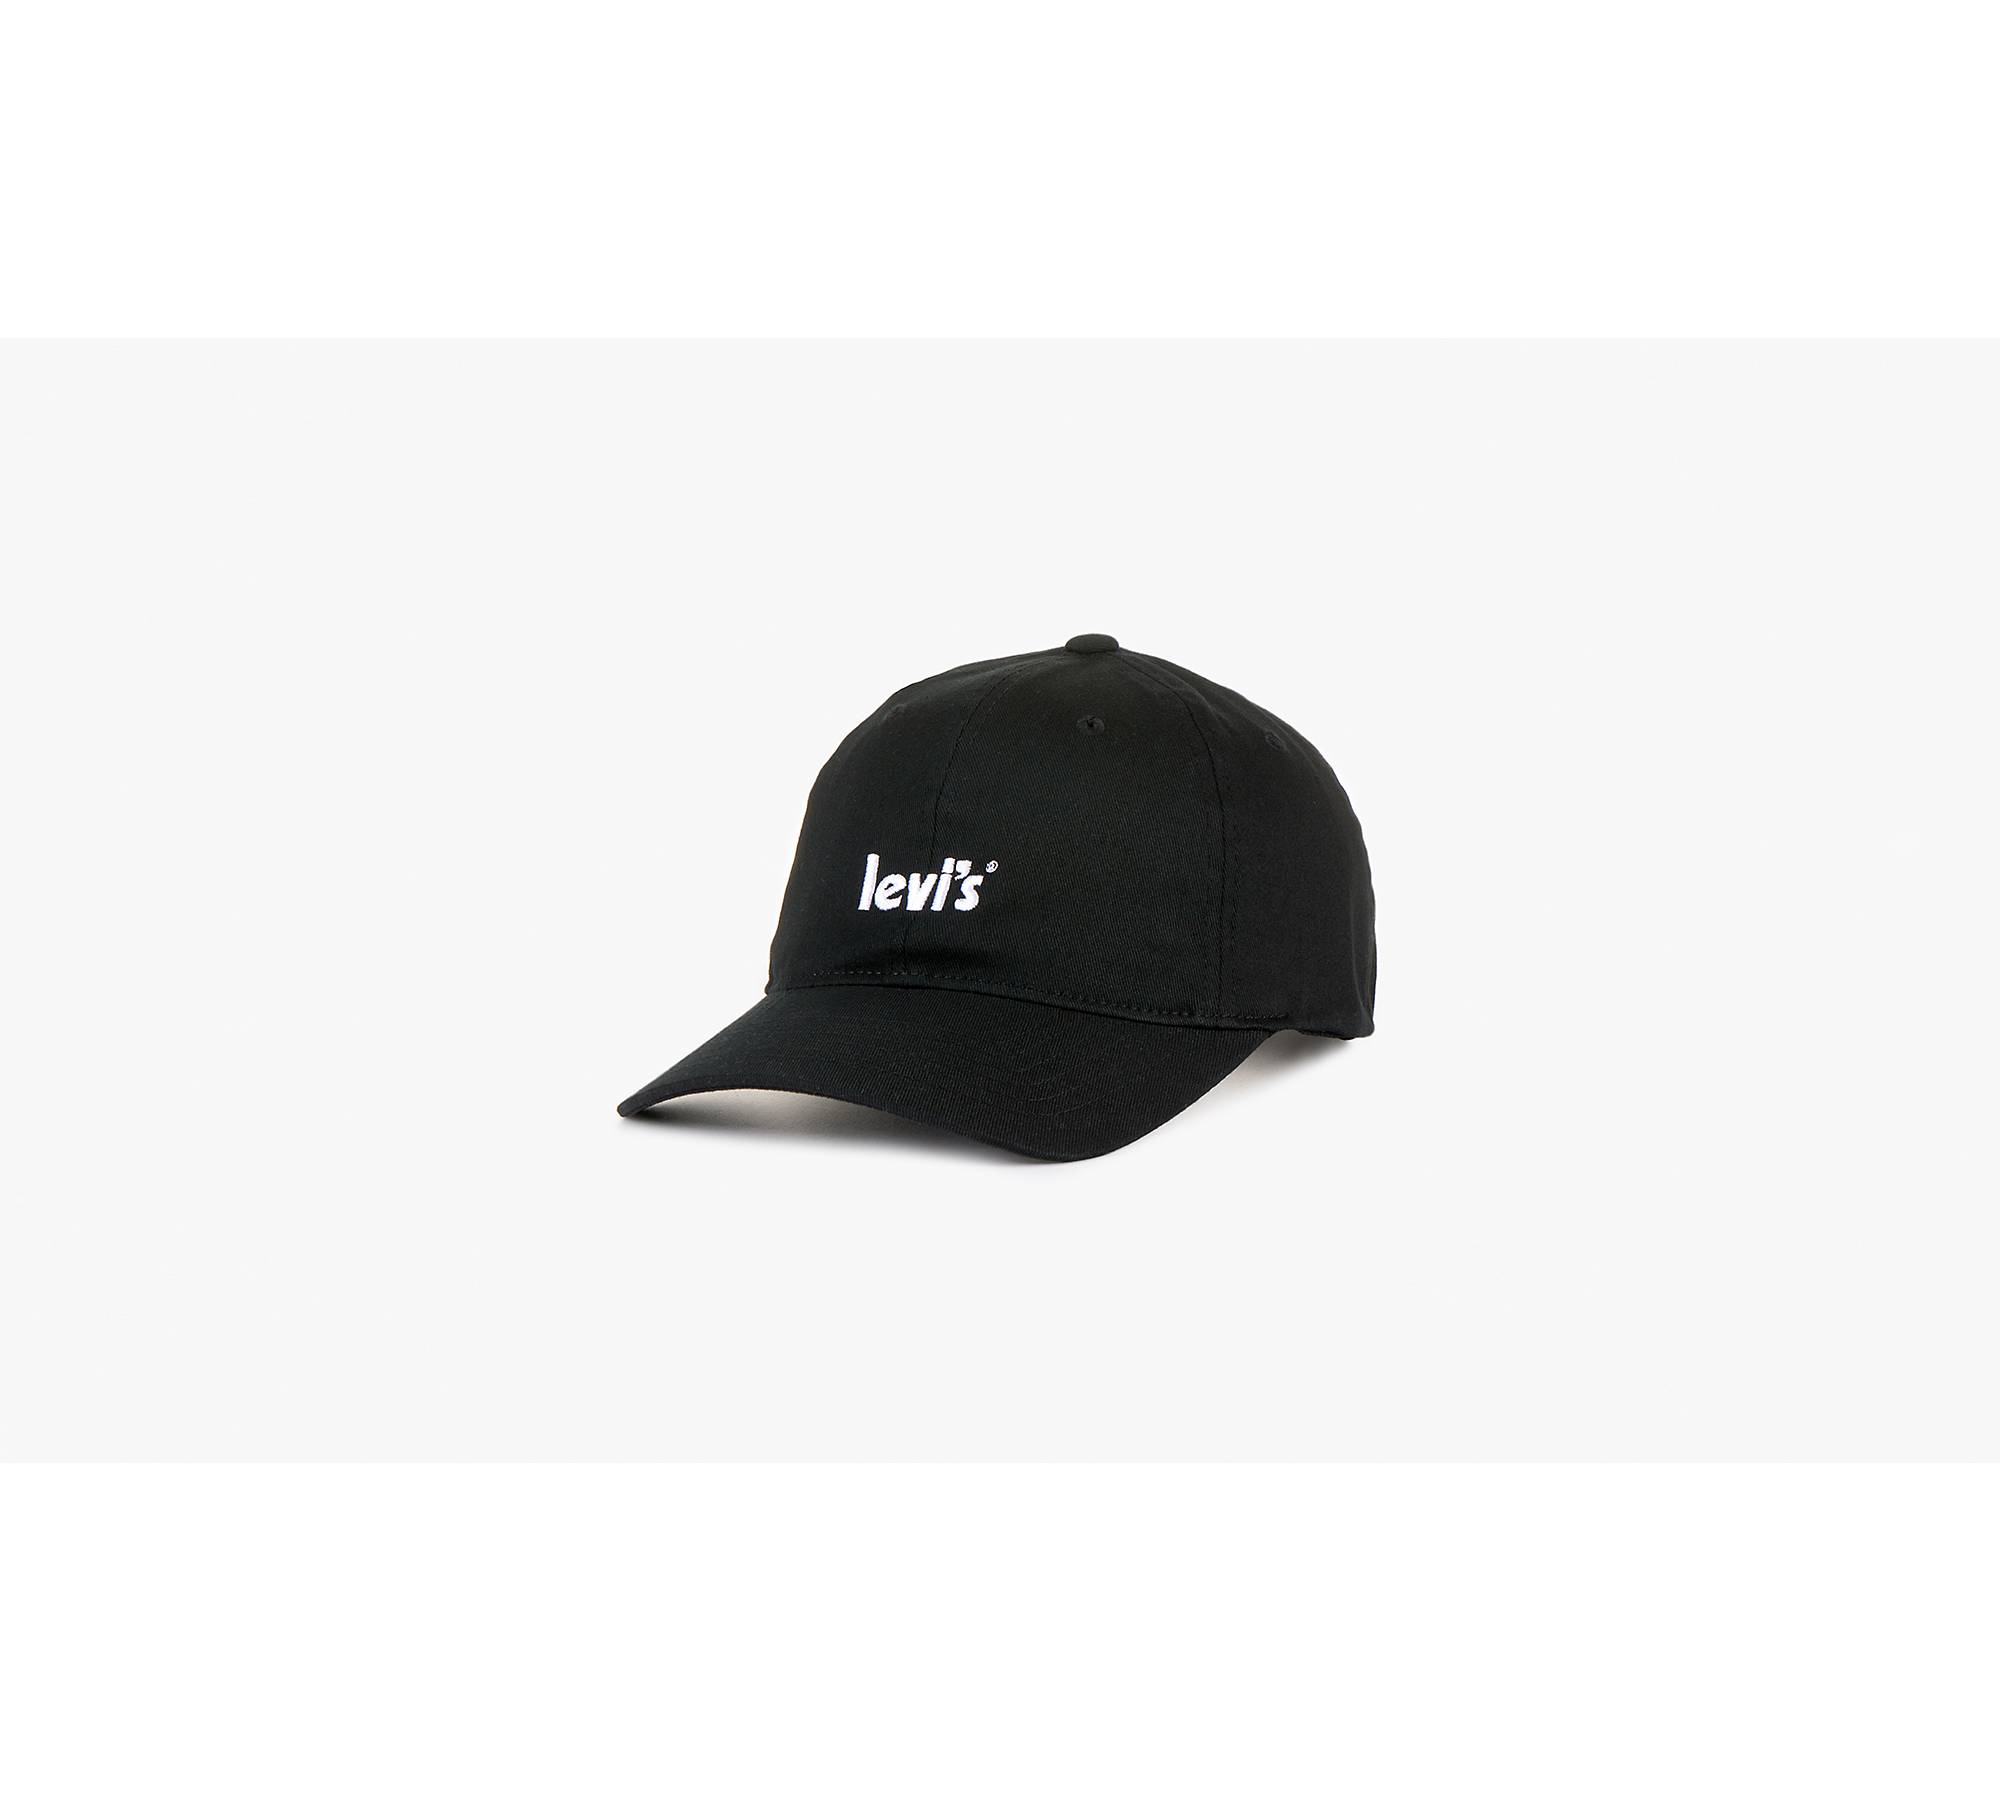 MXR Logo Flexfit Baseball Cap, Black, Large/Extra Large